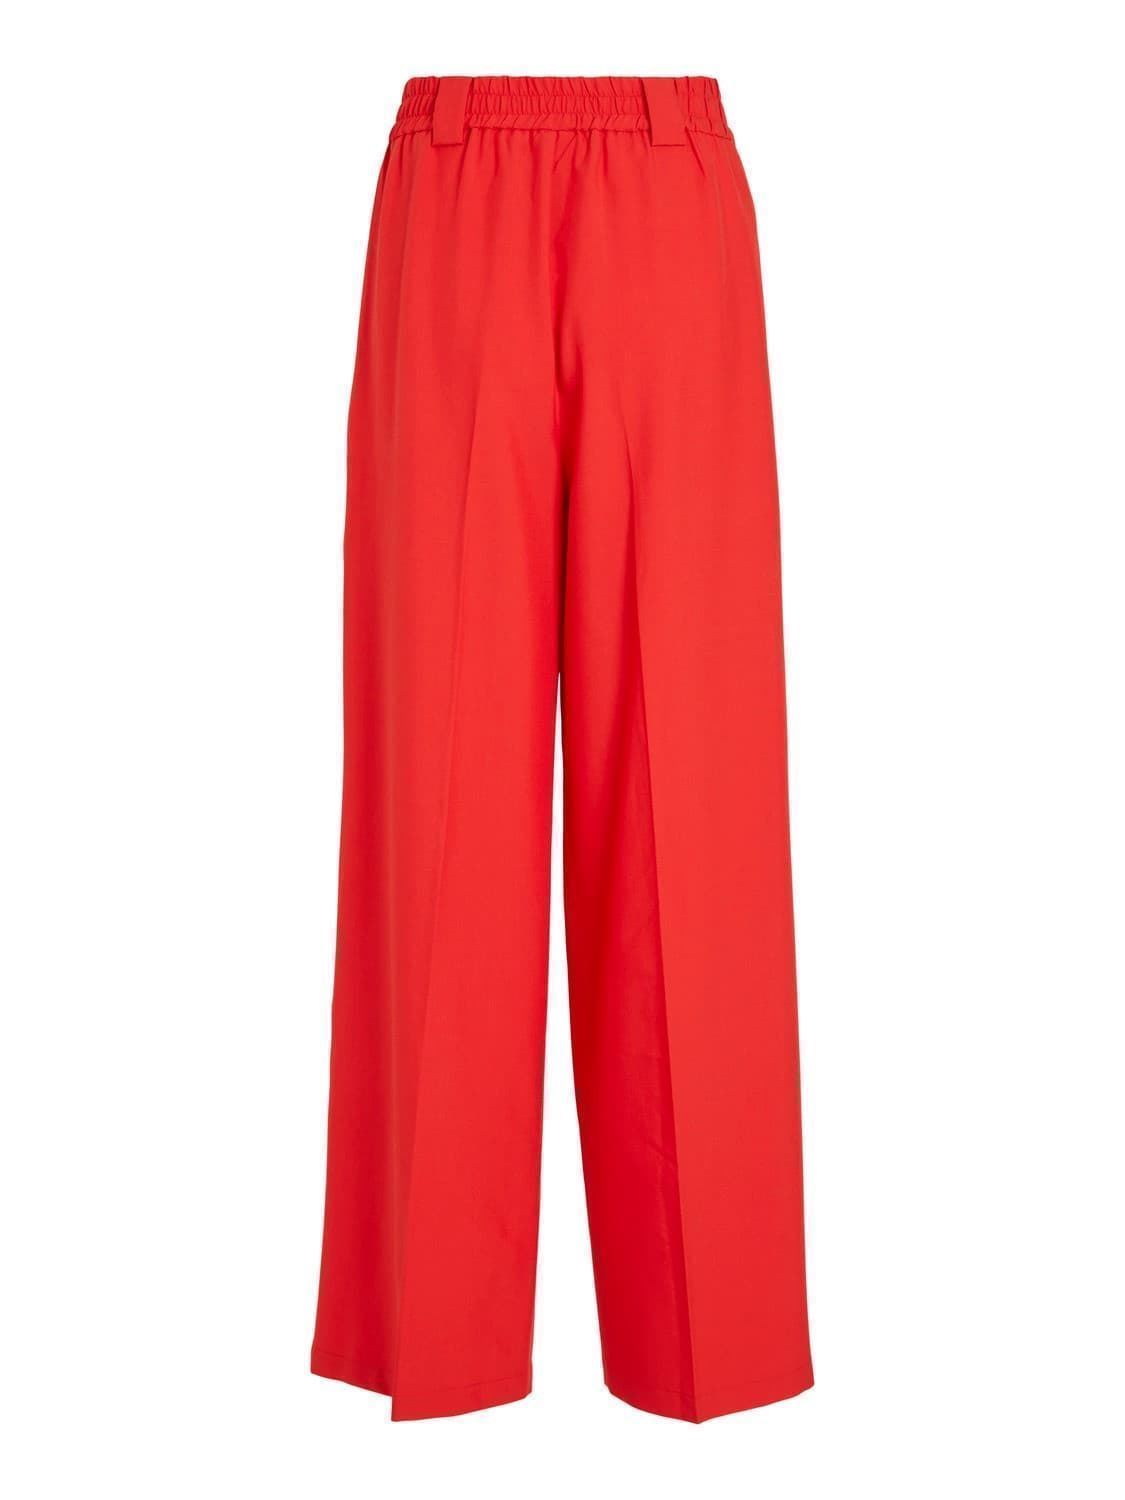 Pantalón rojo vifine - Imagen 6